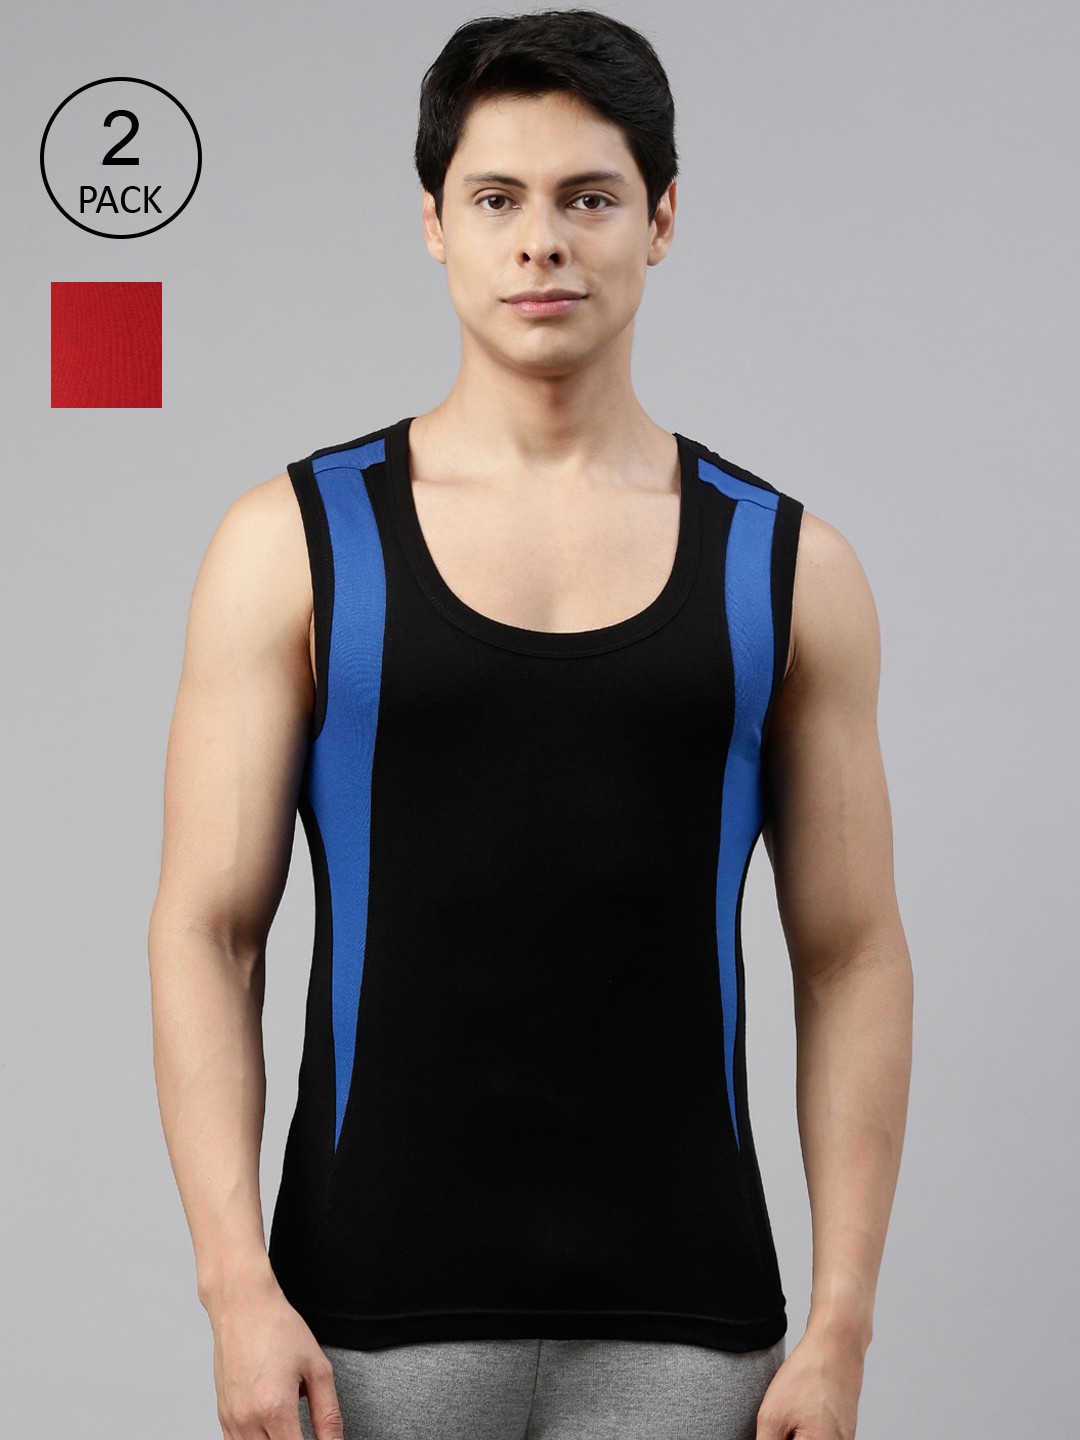 Clothing Innerwear Vests | DIXCY SCOTT Men Pack Of 2 Black & Red Solid Cotton Gym Vests - YN64072